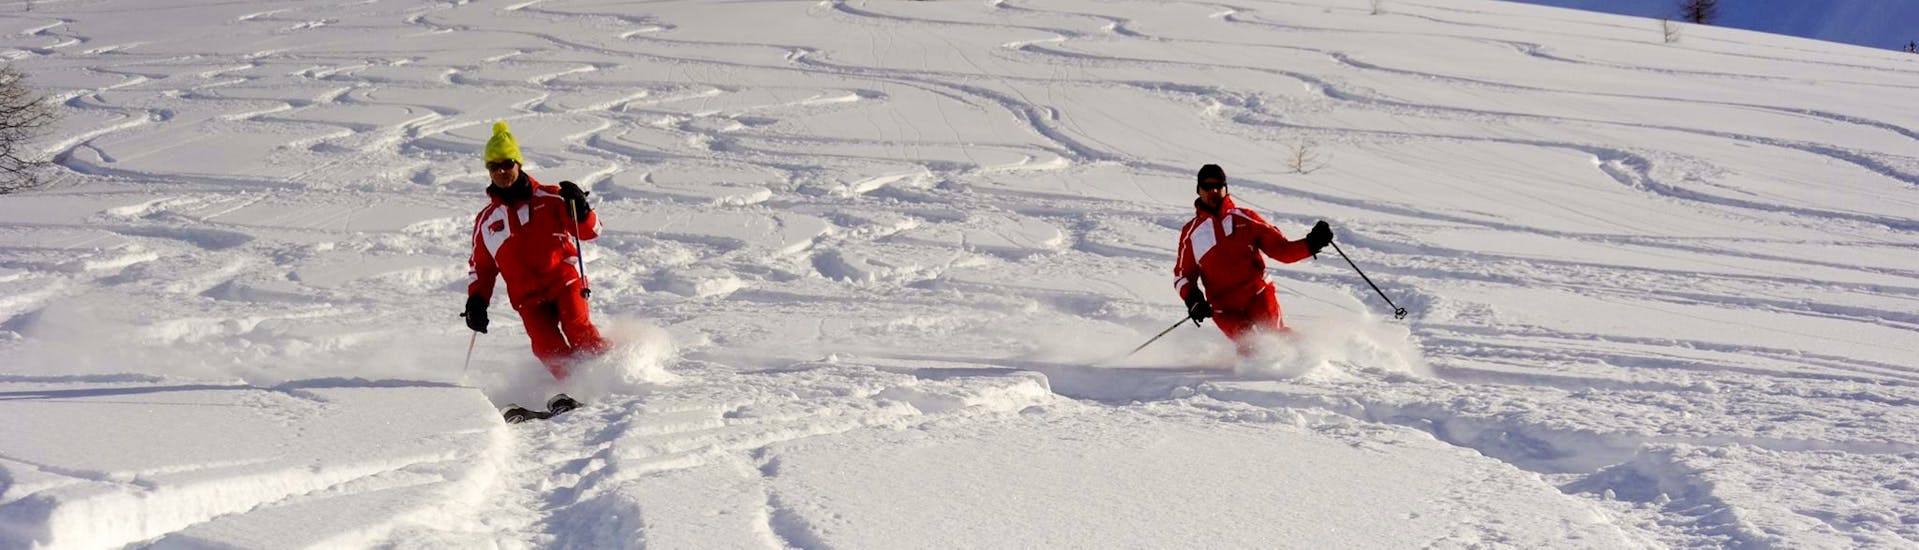 Lezioni di sci per adulti a partire da 13 anni per tutti i livelli.